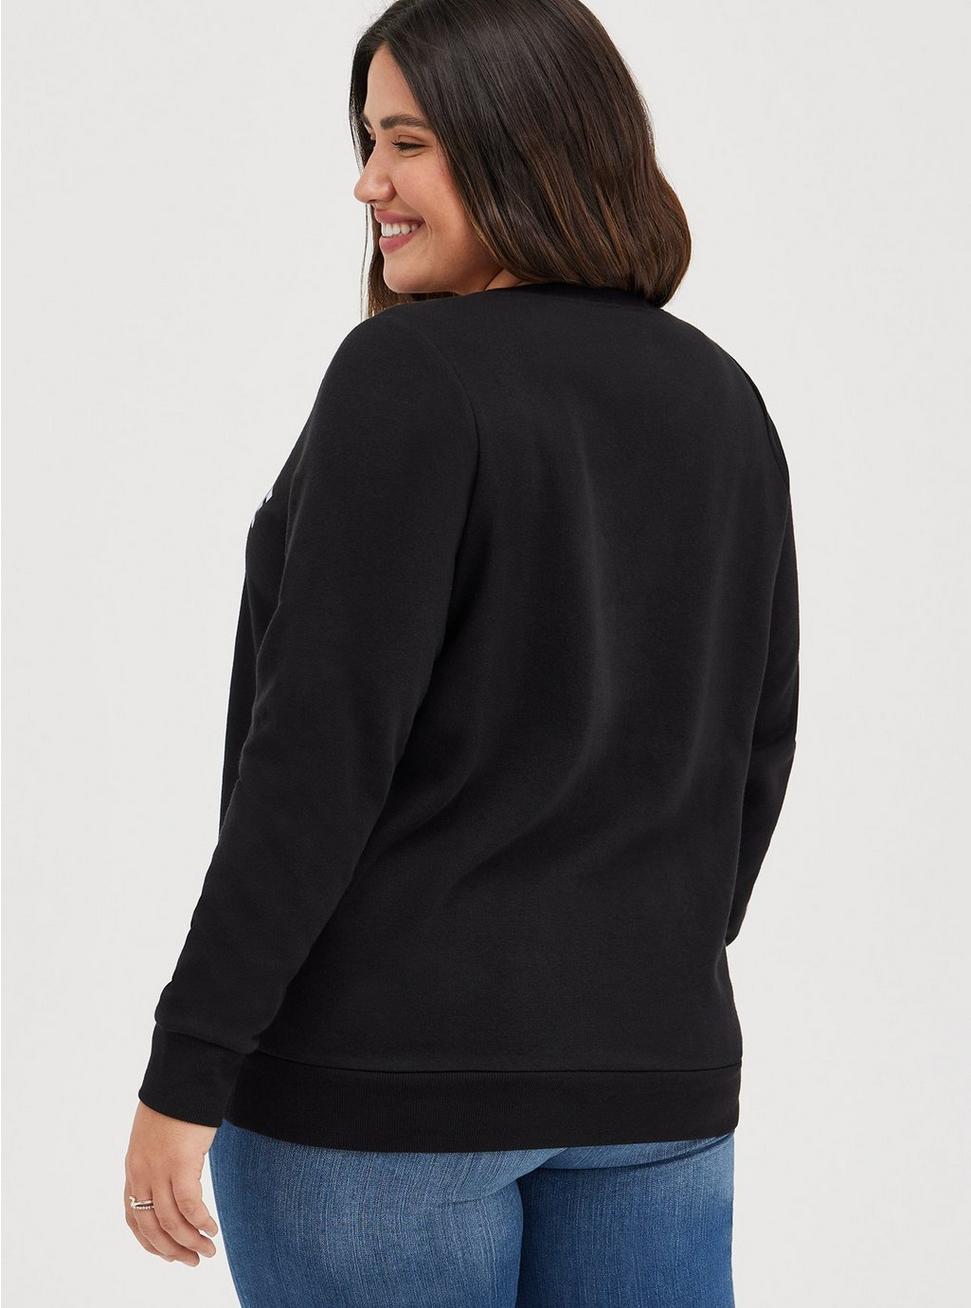 Plus Size Sweatshirt - Cozy Fleece Disney Princess, DEEP BLACK, alternate